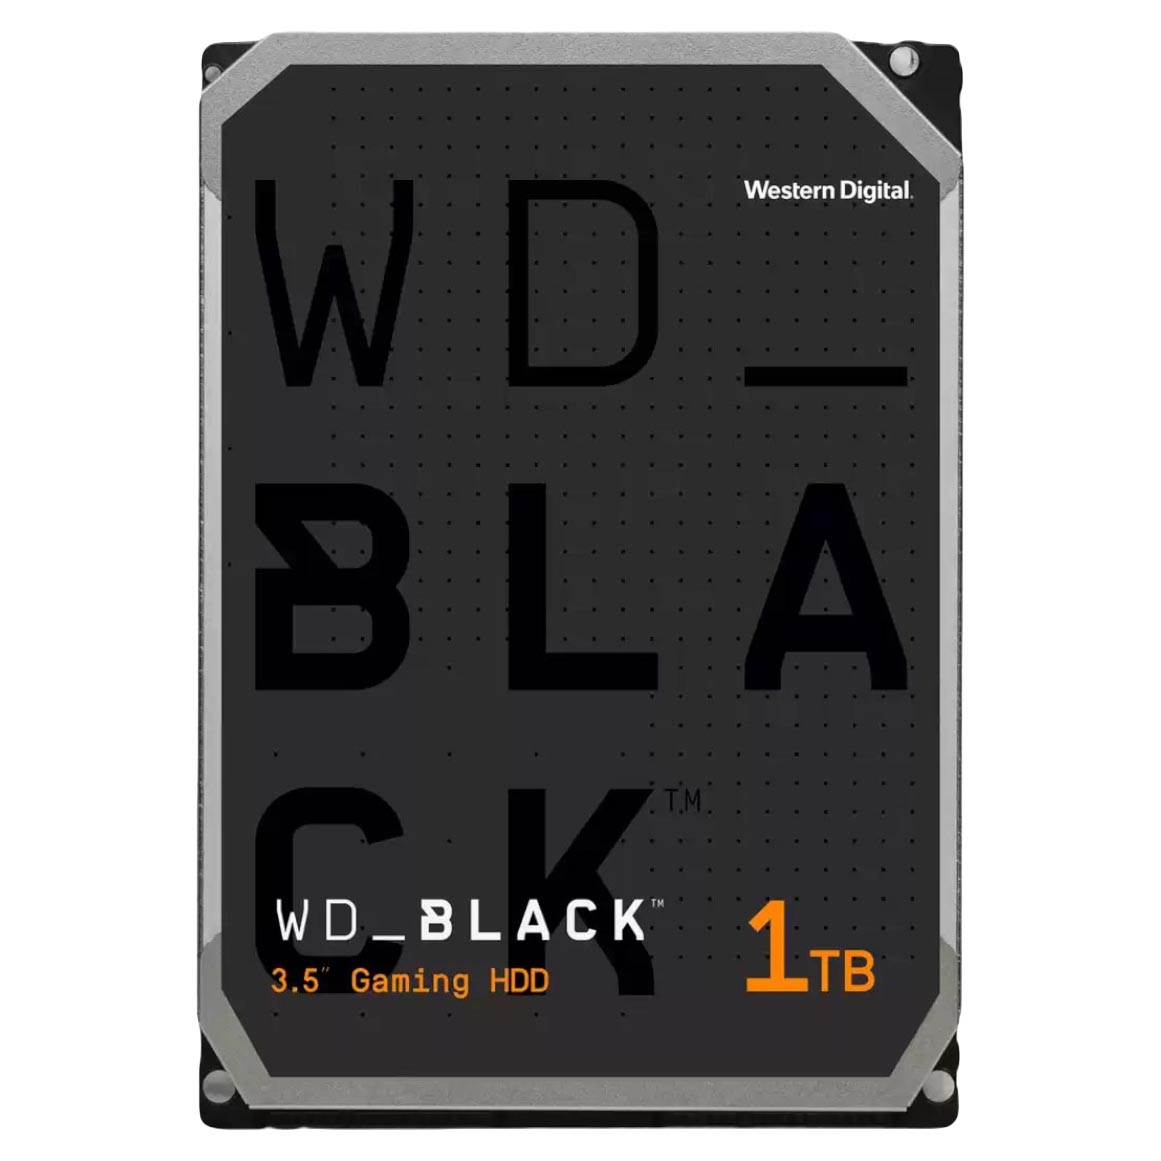 Внутренний жесткий диск Western Digital WD Black Gaming, WD1003FZEX, 1 Тб жесткий диск western digital wd gold 6 тб 3 5 wd6003fryz